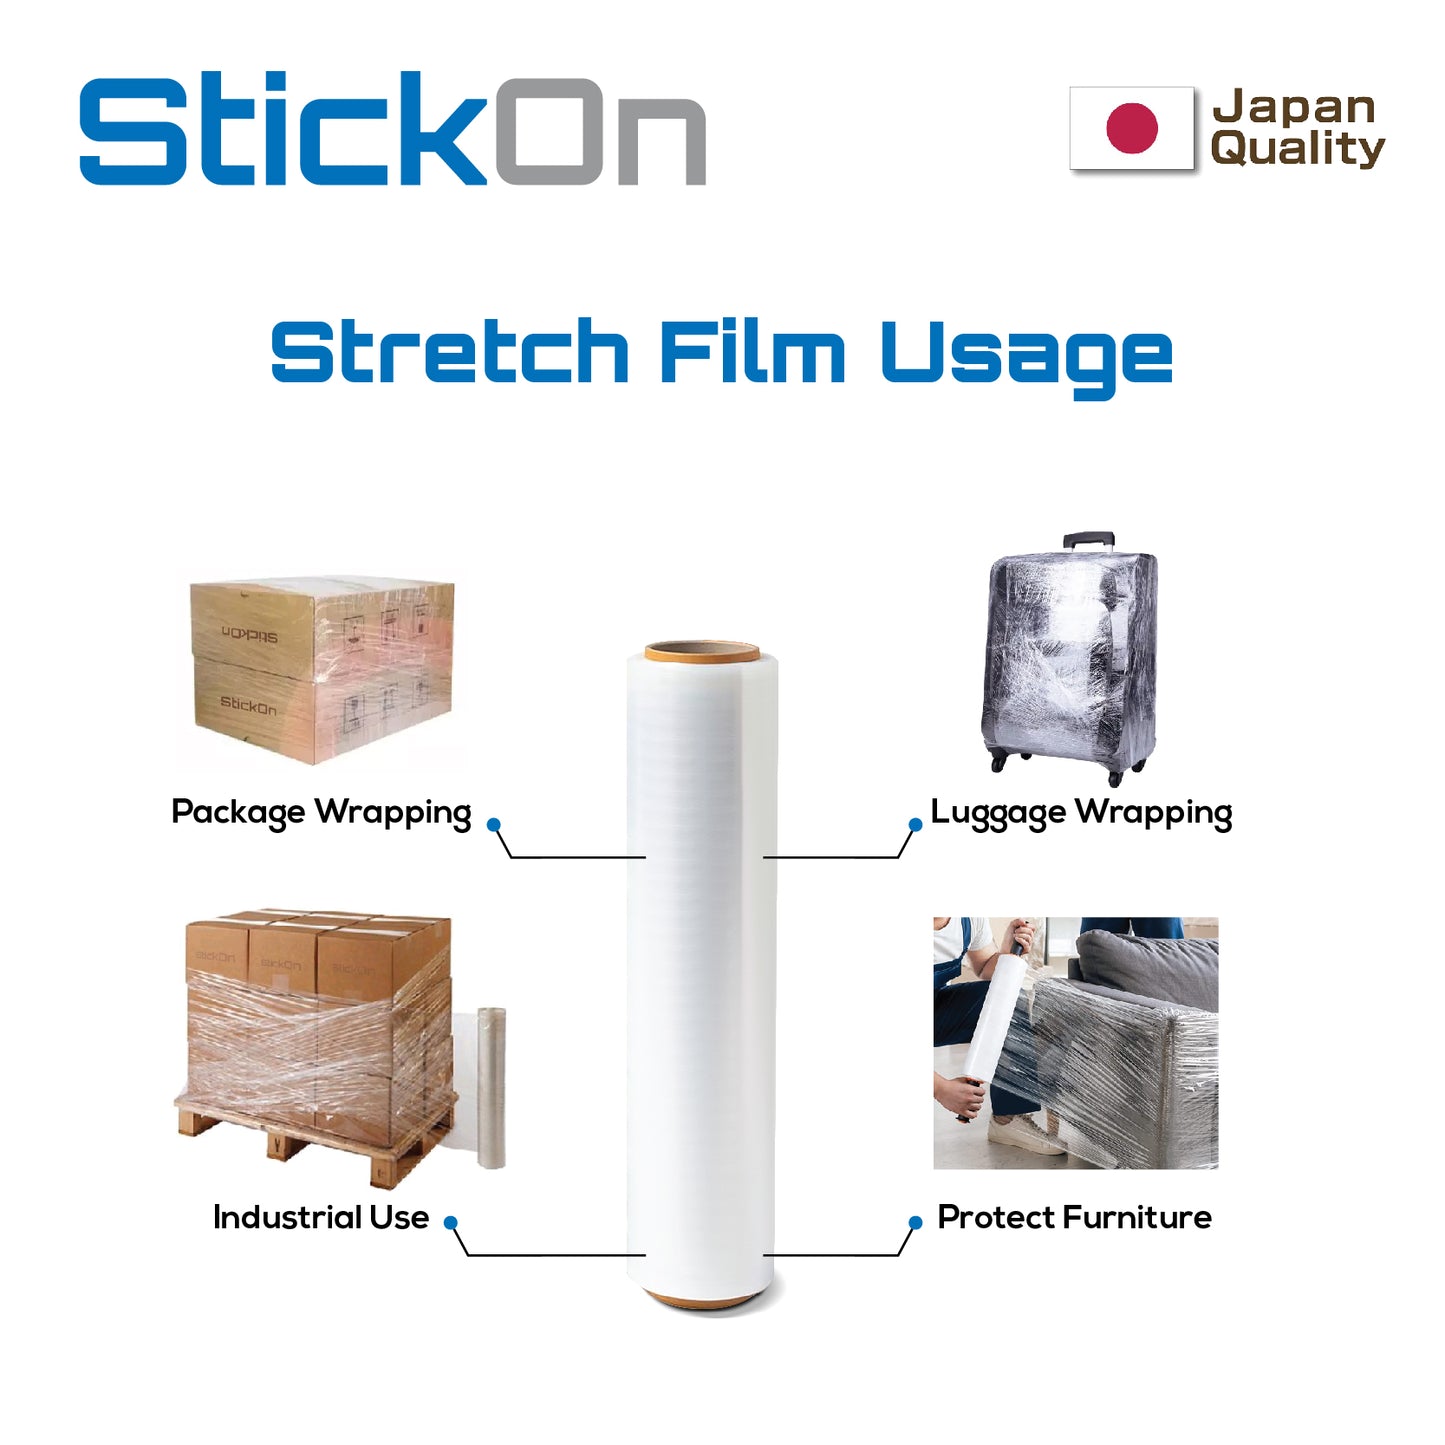 Stretch Film (Clear)